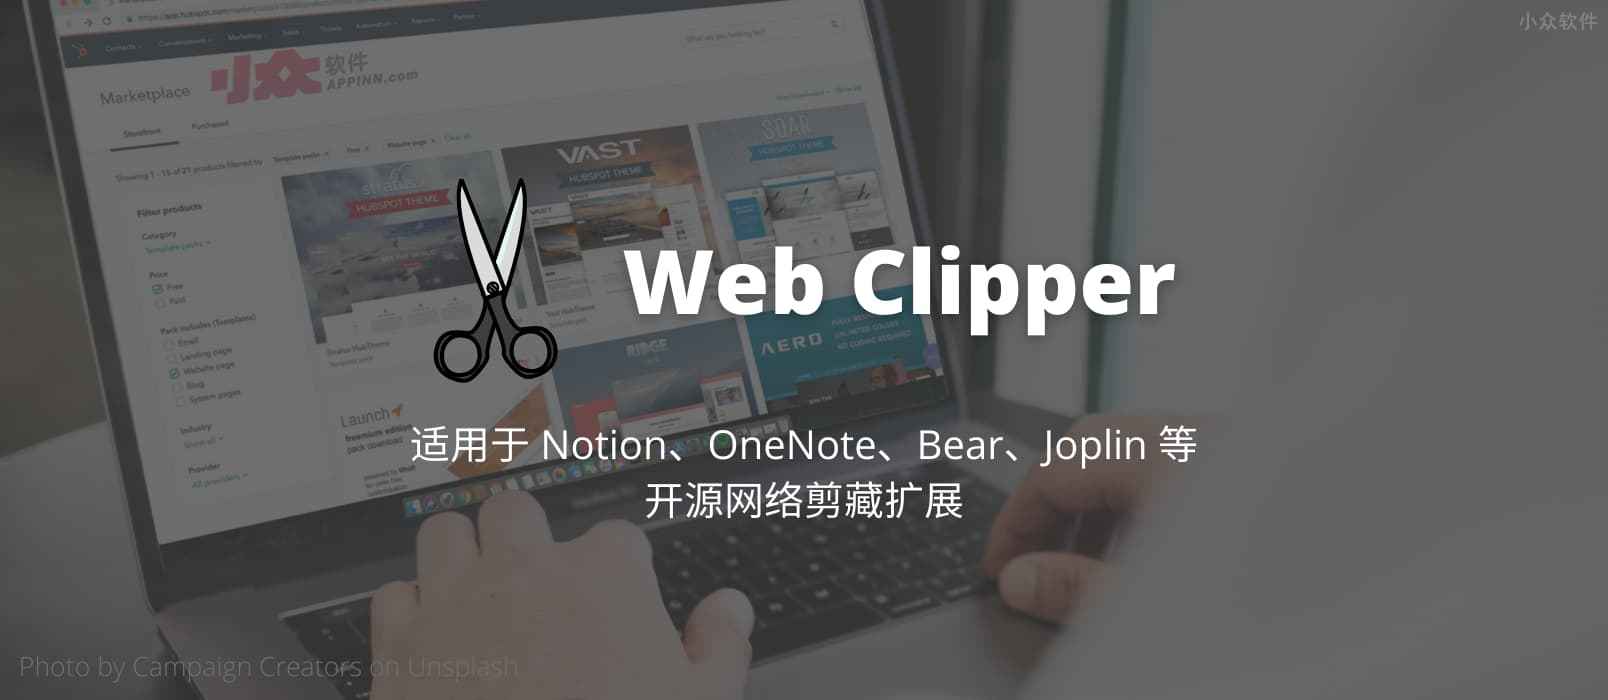 Web Clipper - 适用于 Notion、OneNote、Bear、Joplin 等笔记的开源网络剪藏扩展[Chrome/Firefox]